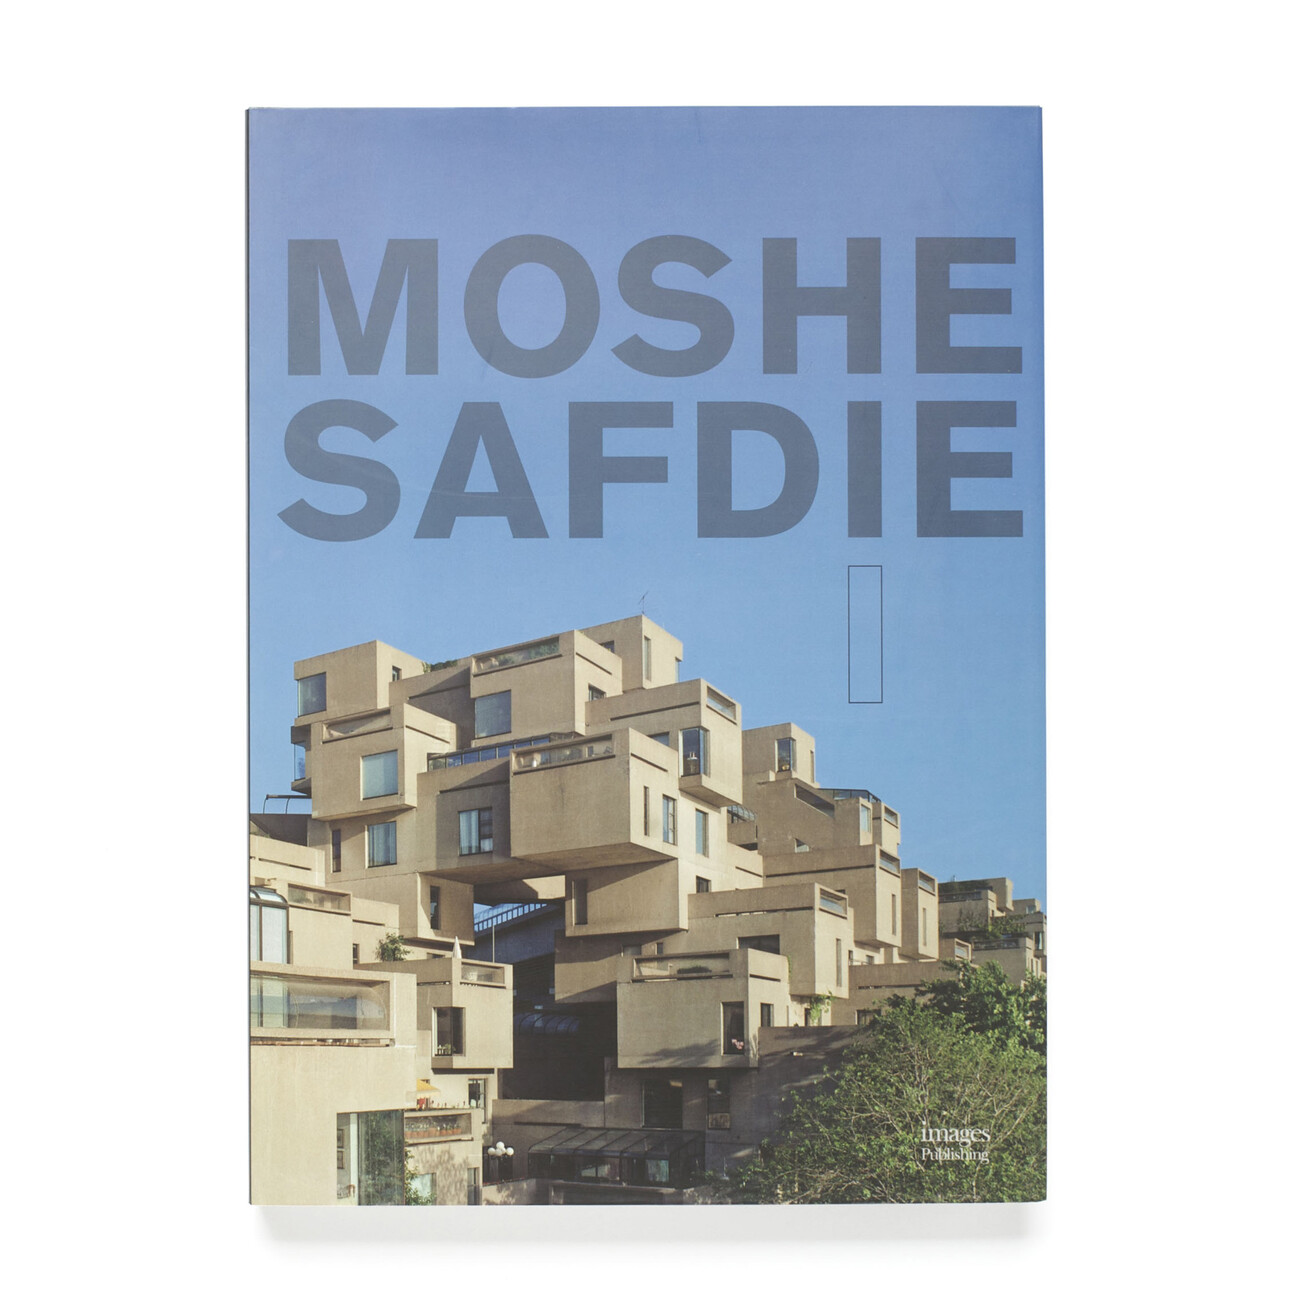 Moshe Safdie book 1 cover